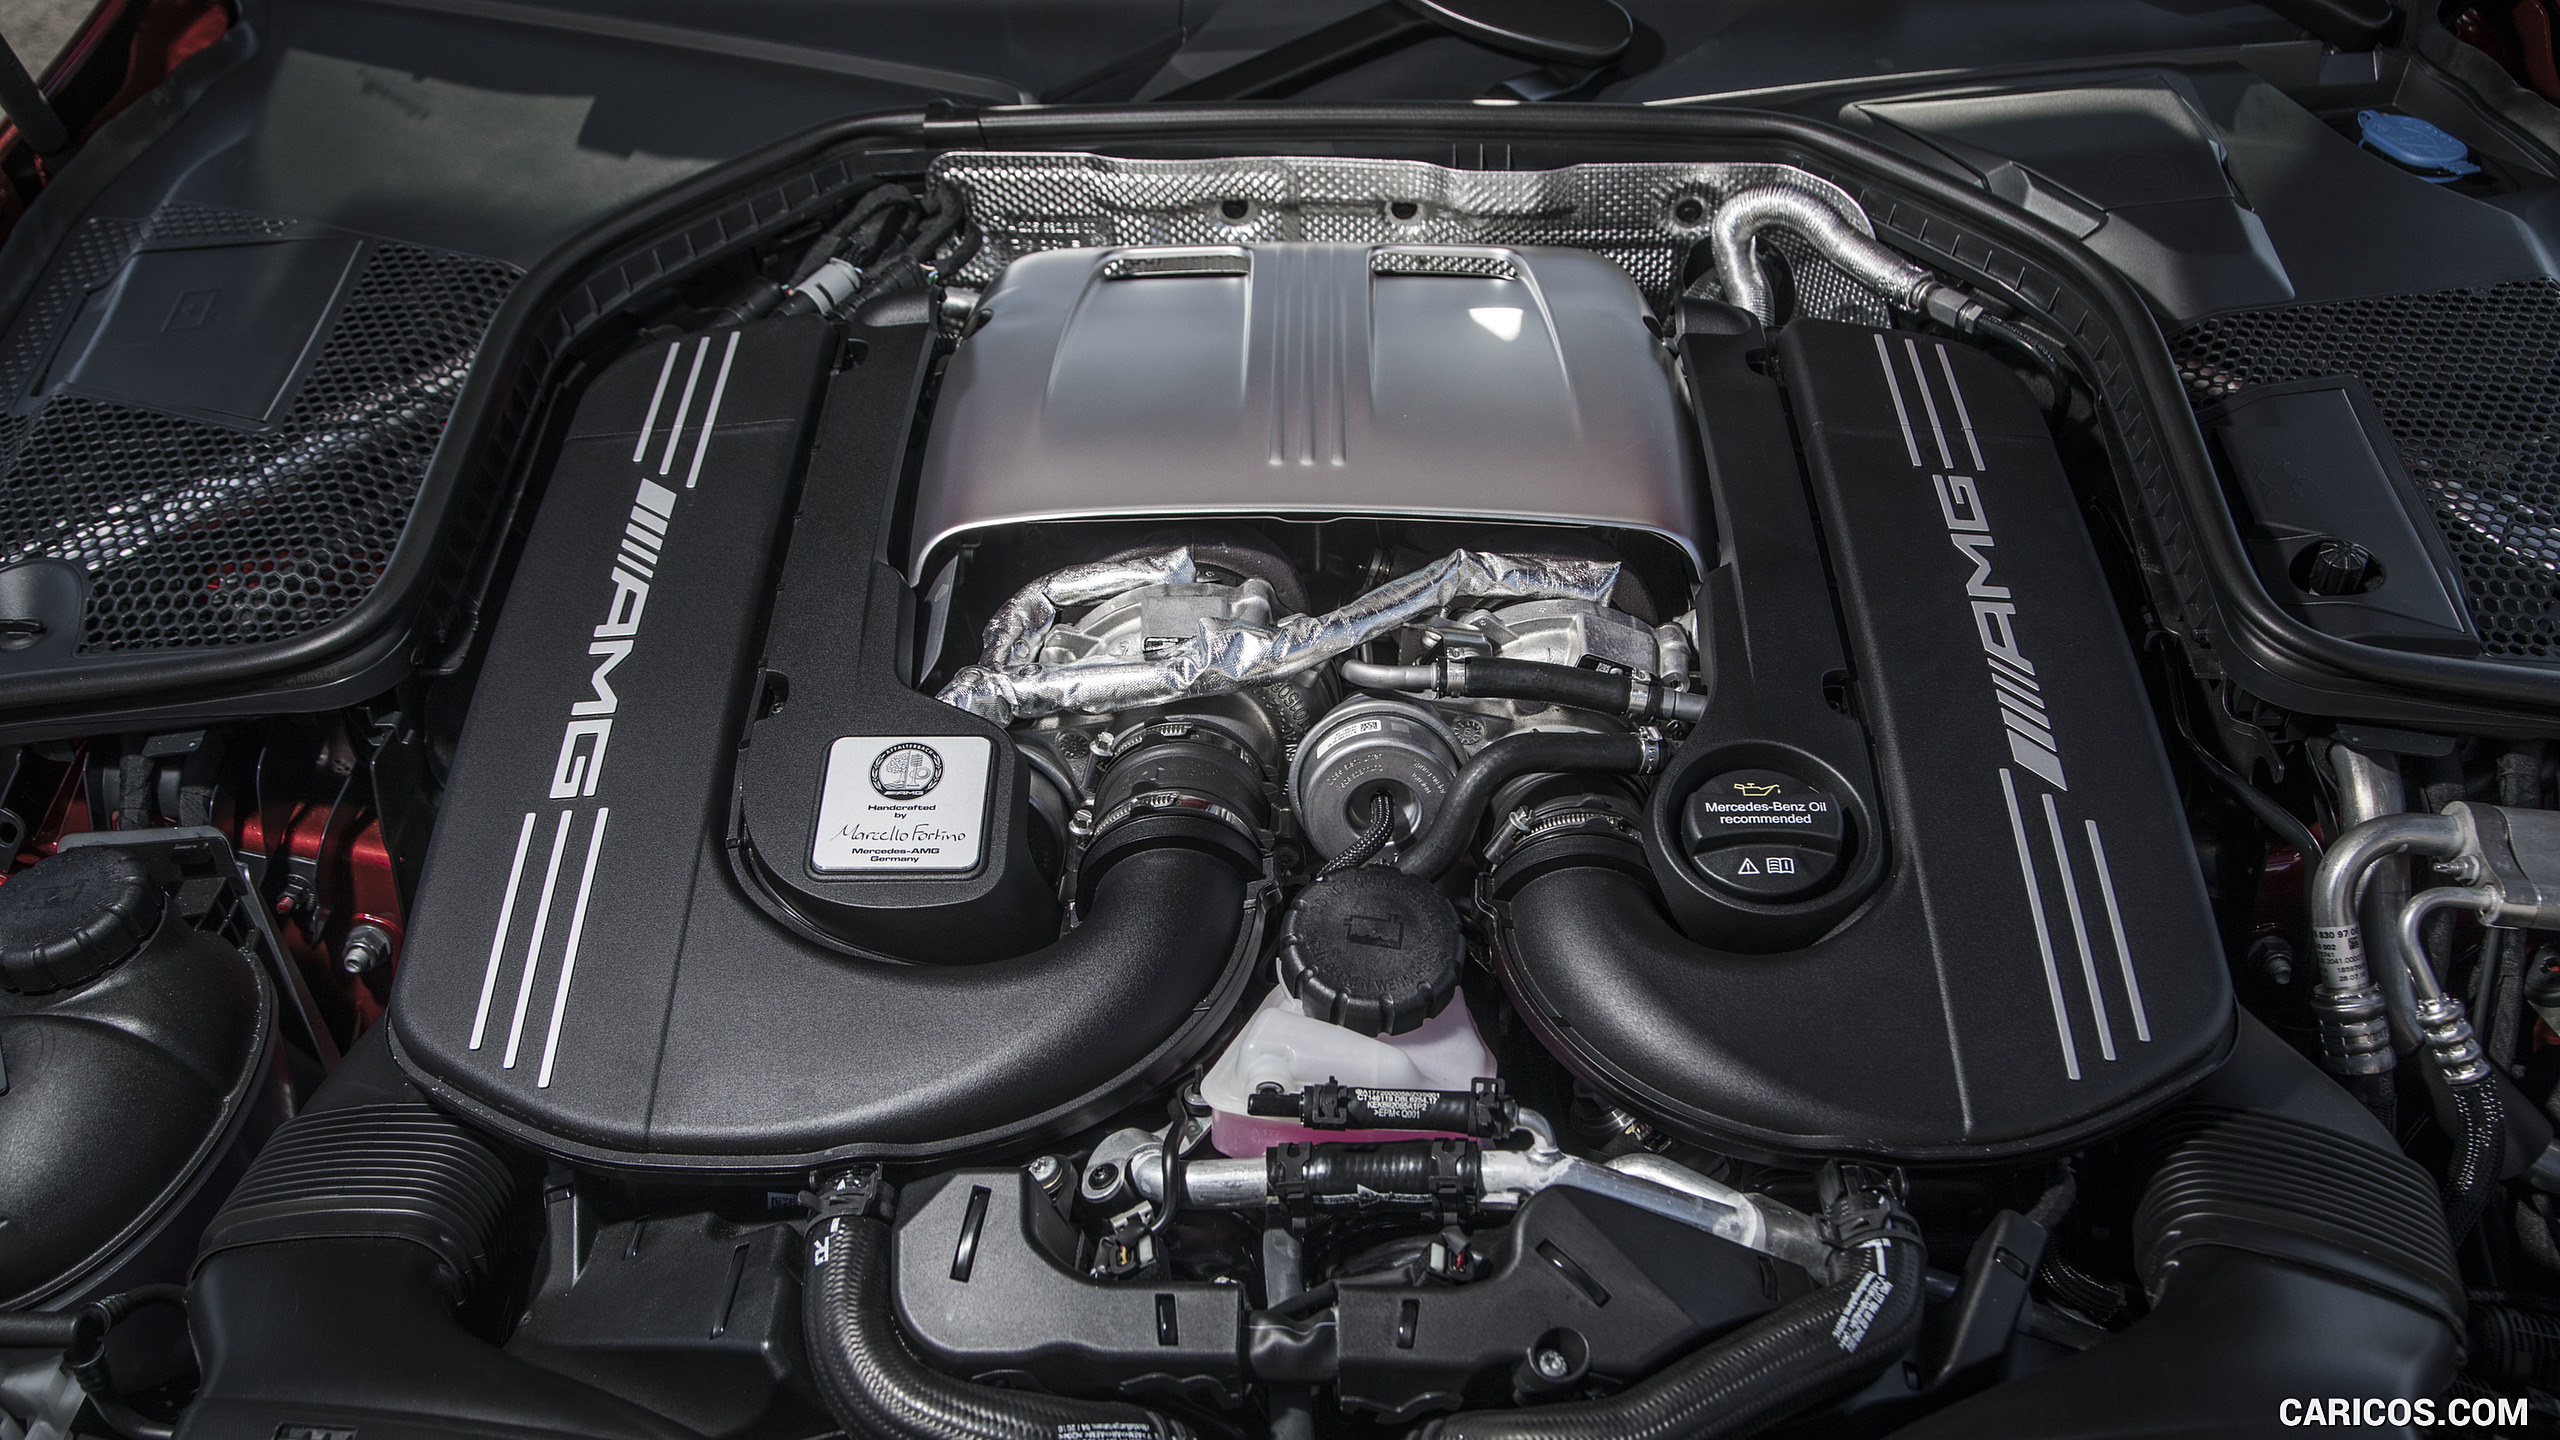 2017 Mercedes-AMG C63 S Cabriolet (US-Spec) - Engine, #222 of 222